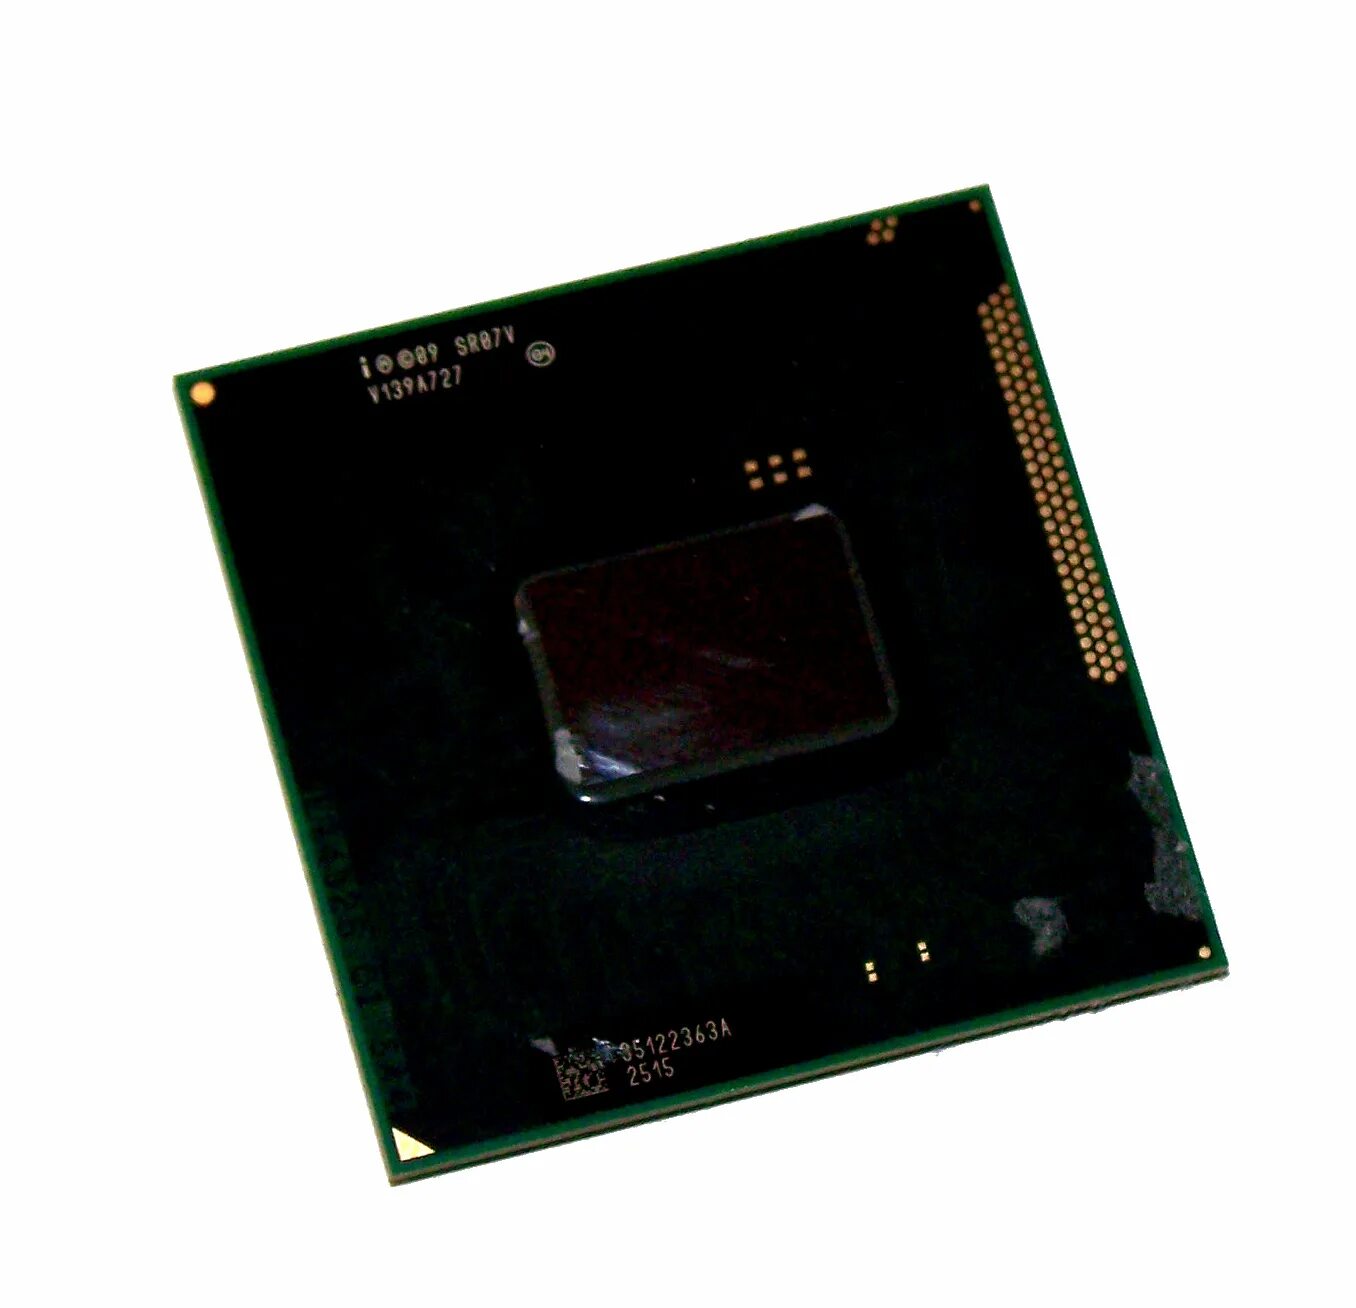 Sr07v процессор. Intel sr07v. CPU b960 2.20GHZ. Socket g2 rpga988b. Сокет g2